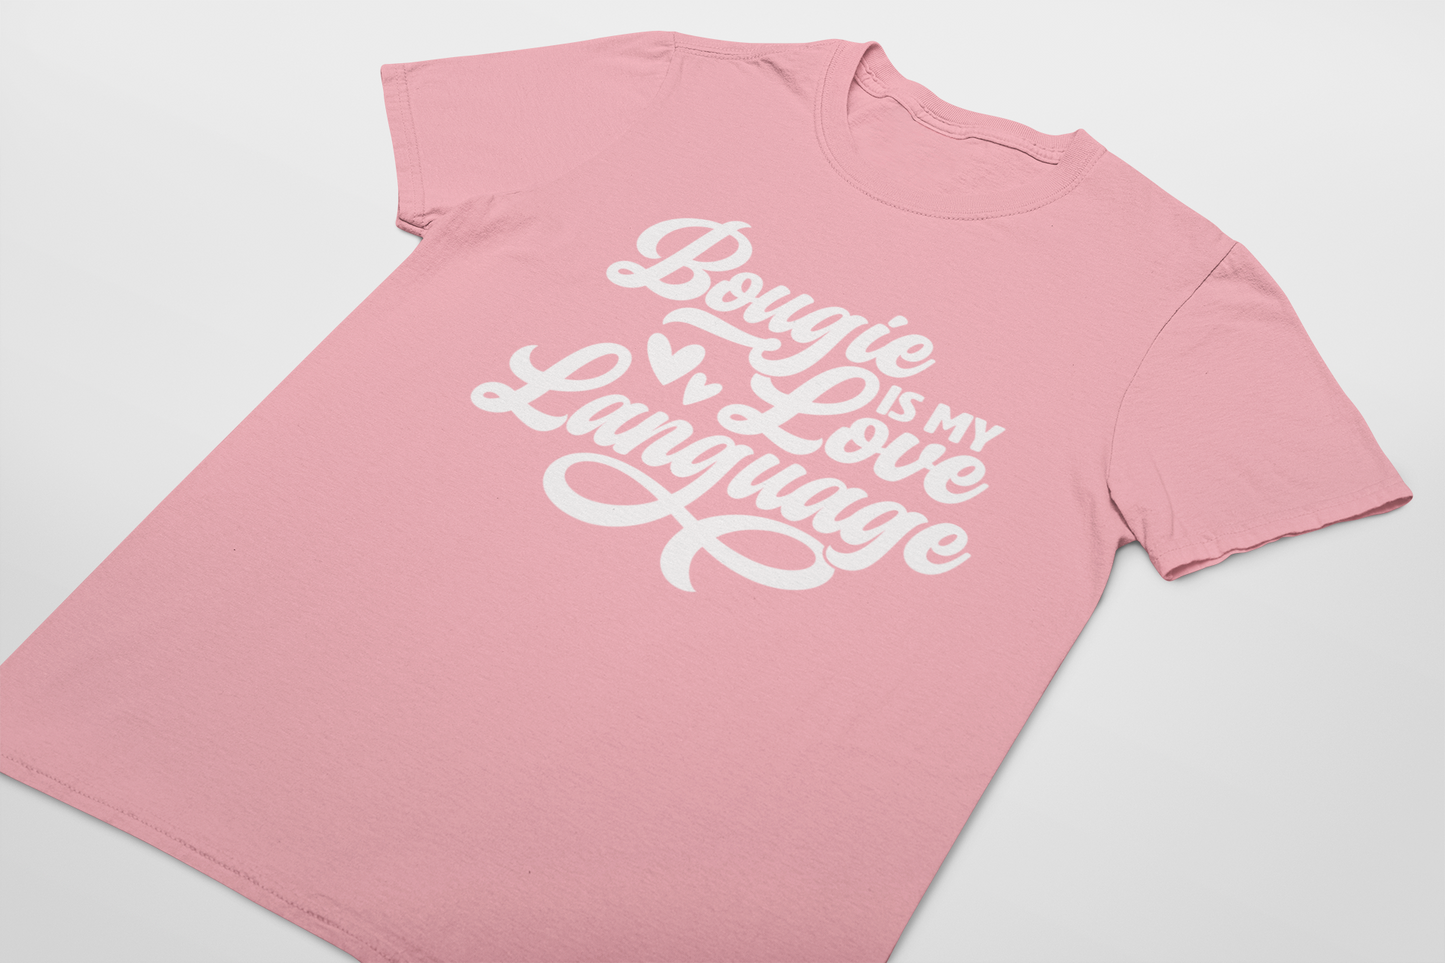 Bougie IS MY Love Language T-shirt